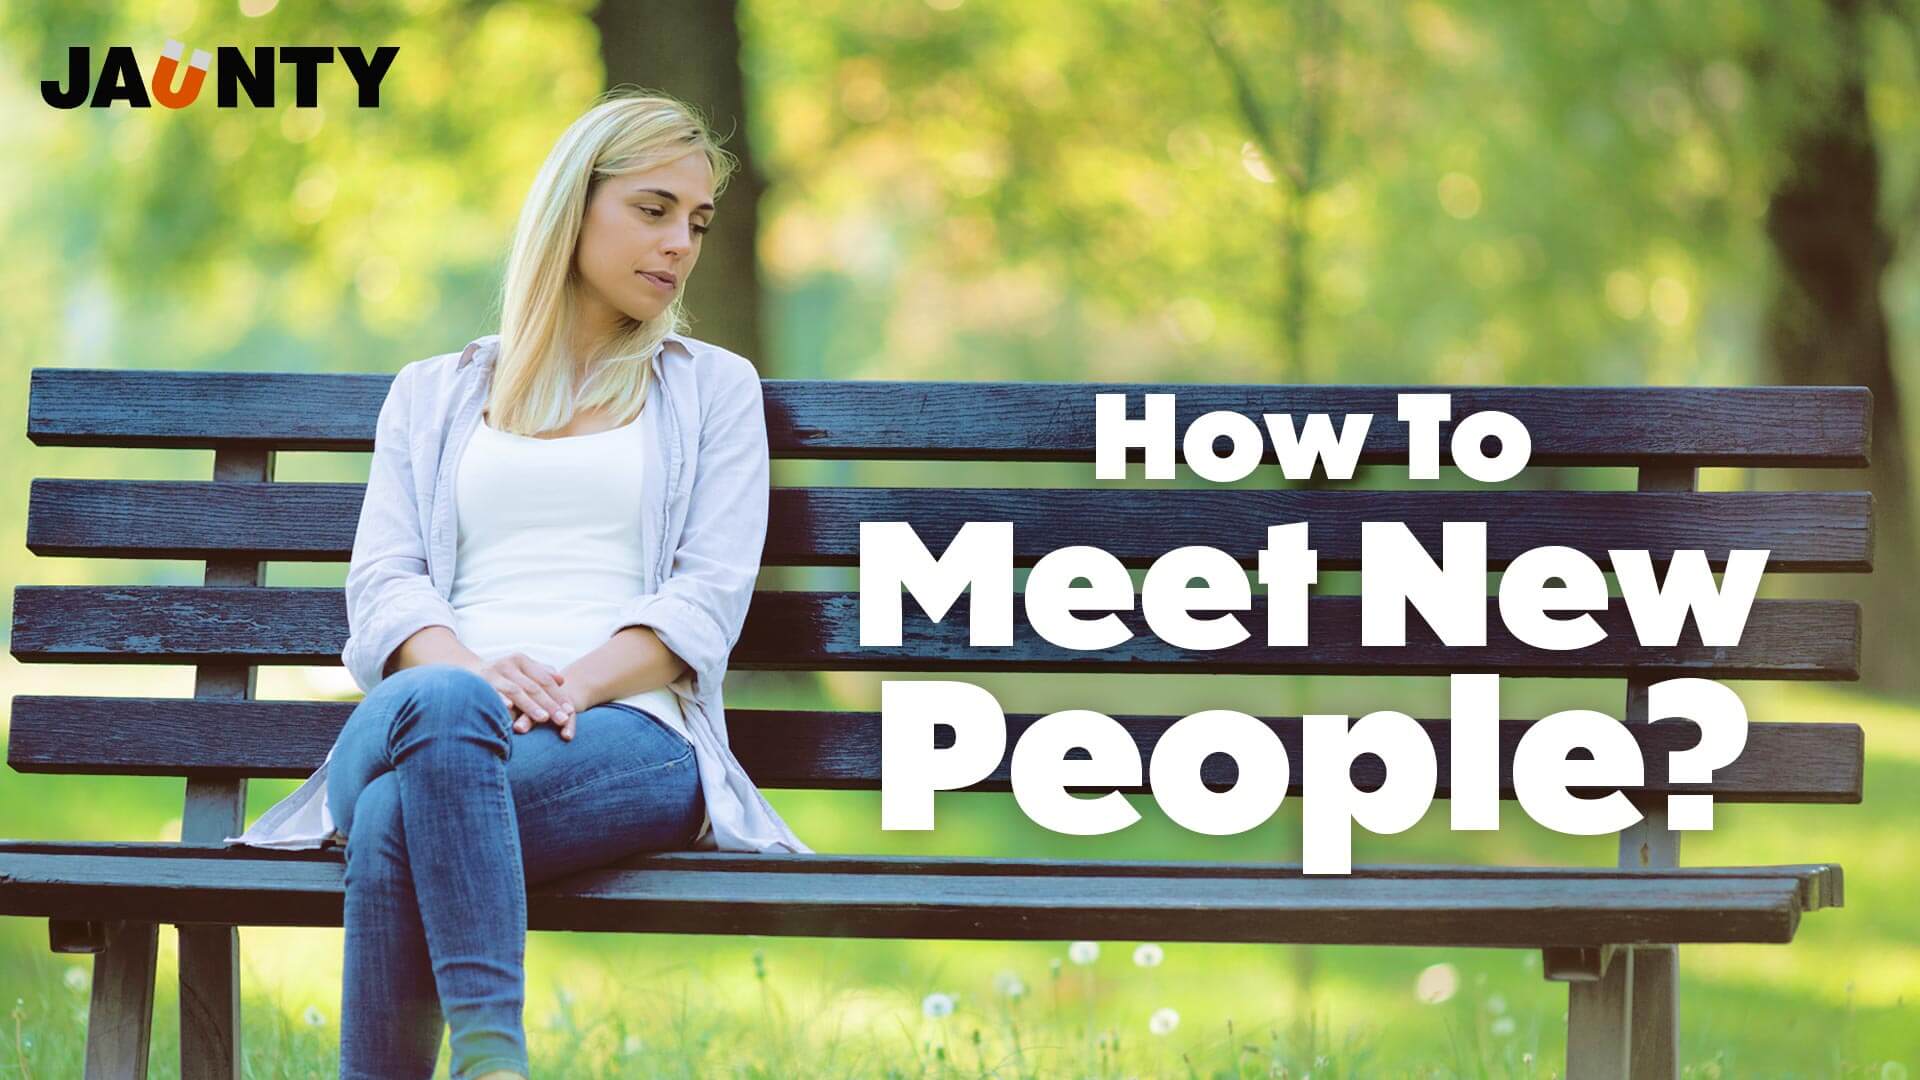 Meet new people today